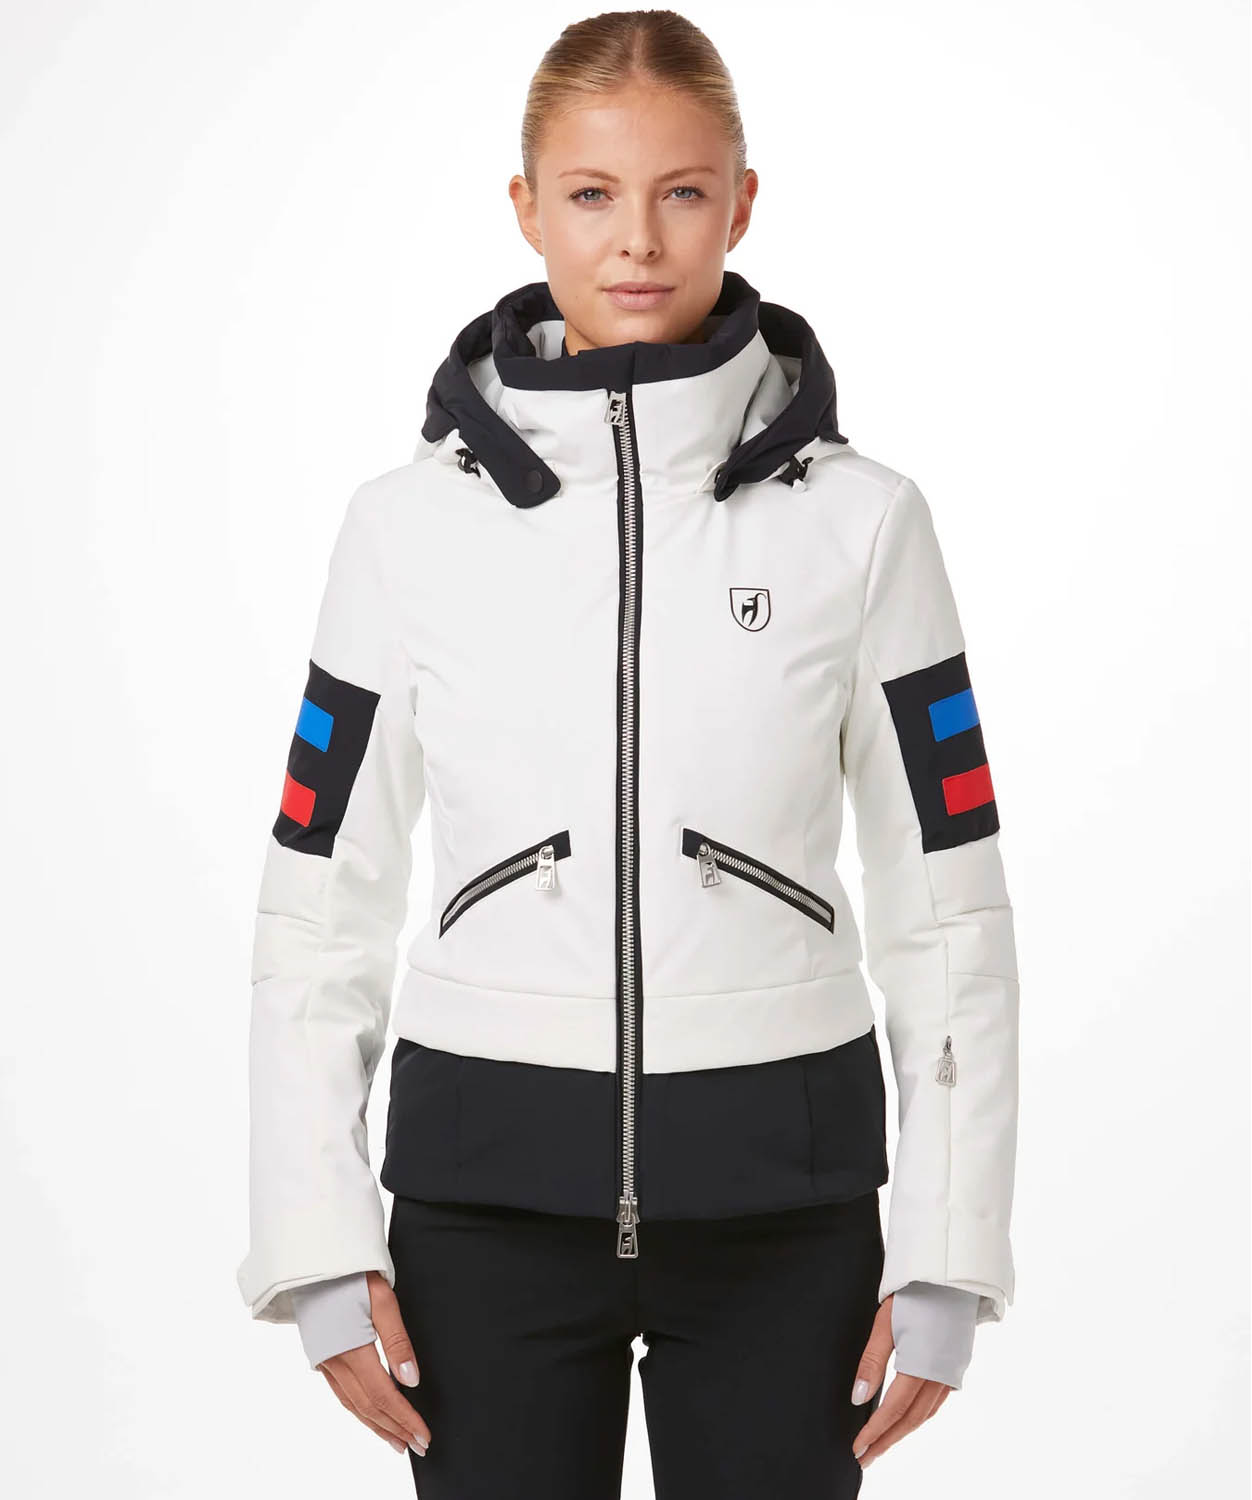 Women's Malou Ski Jacket